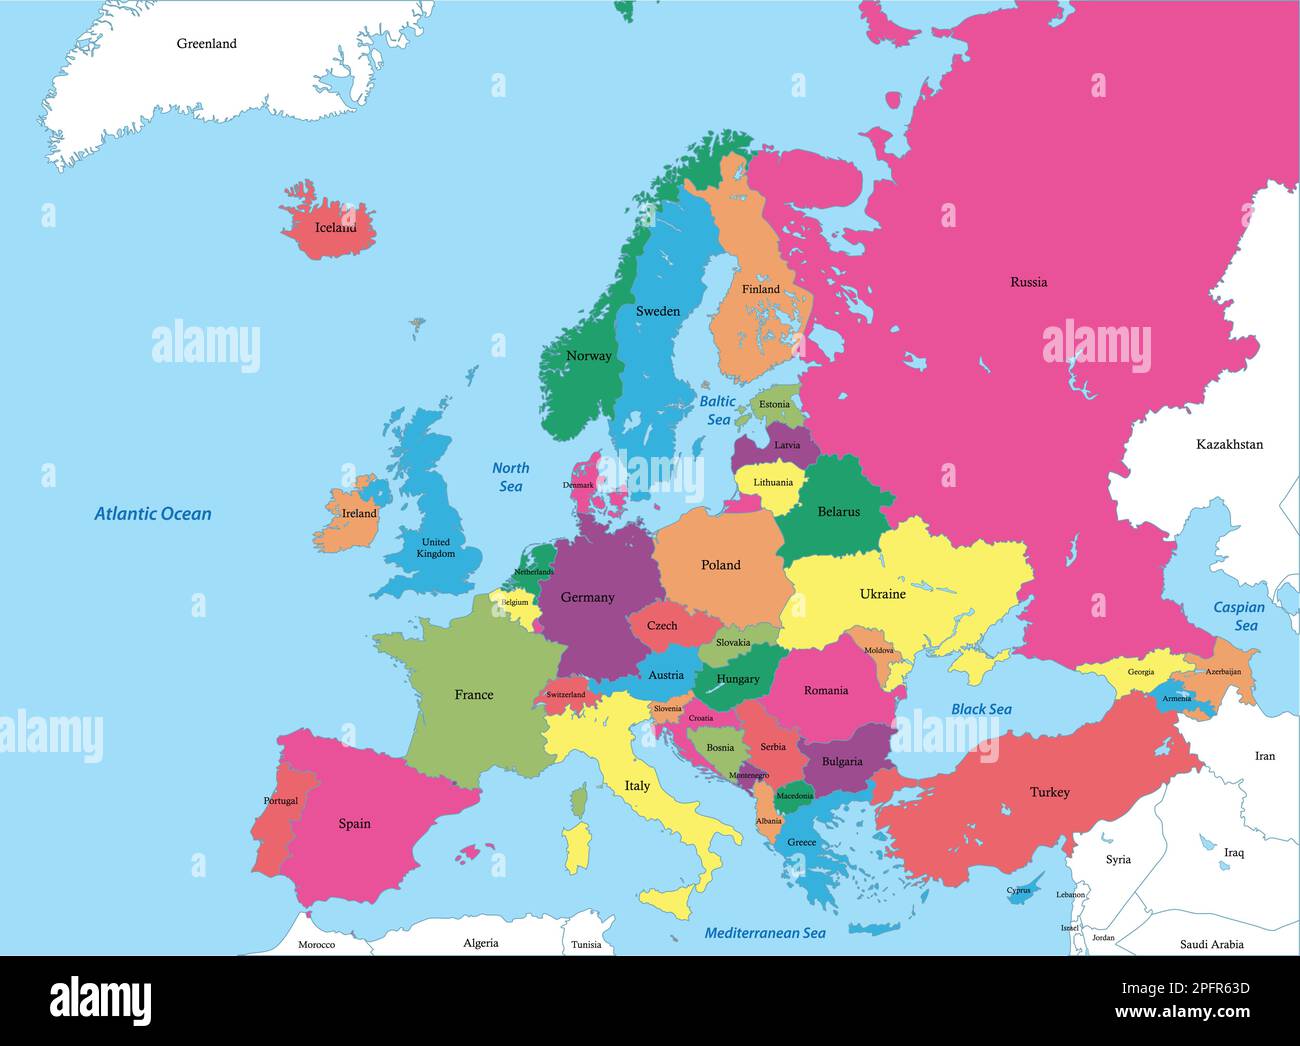 Mapa Político de Europa en lona 65 x 50